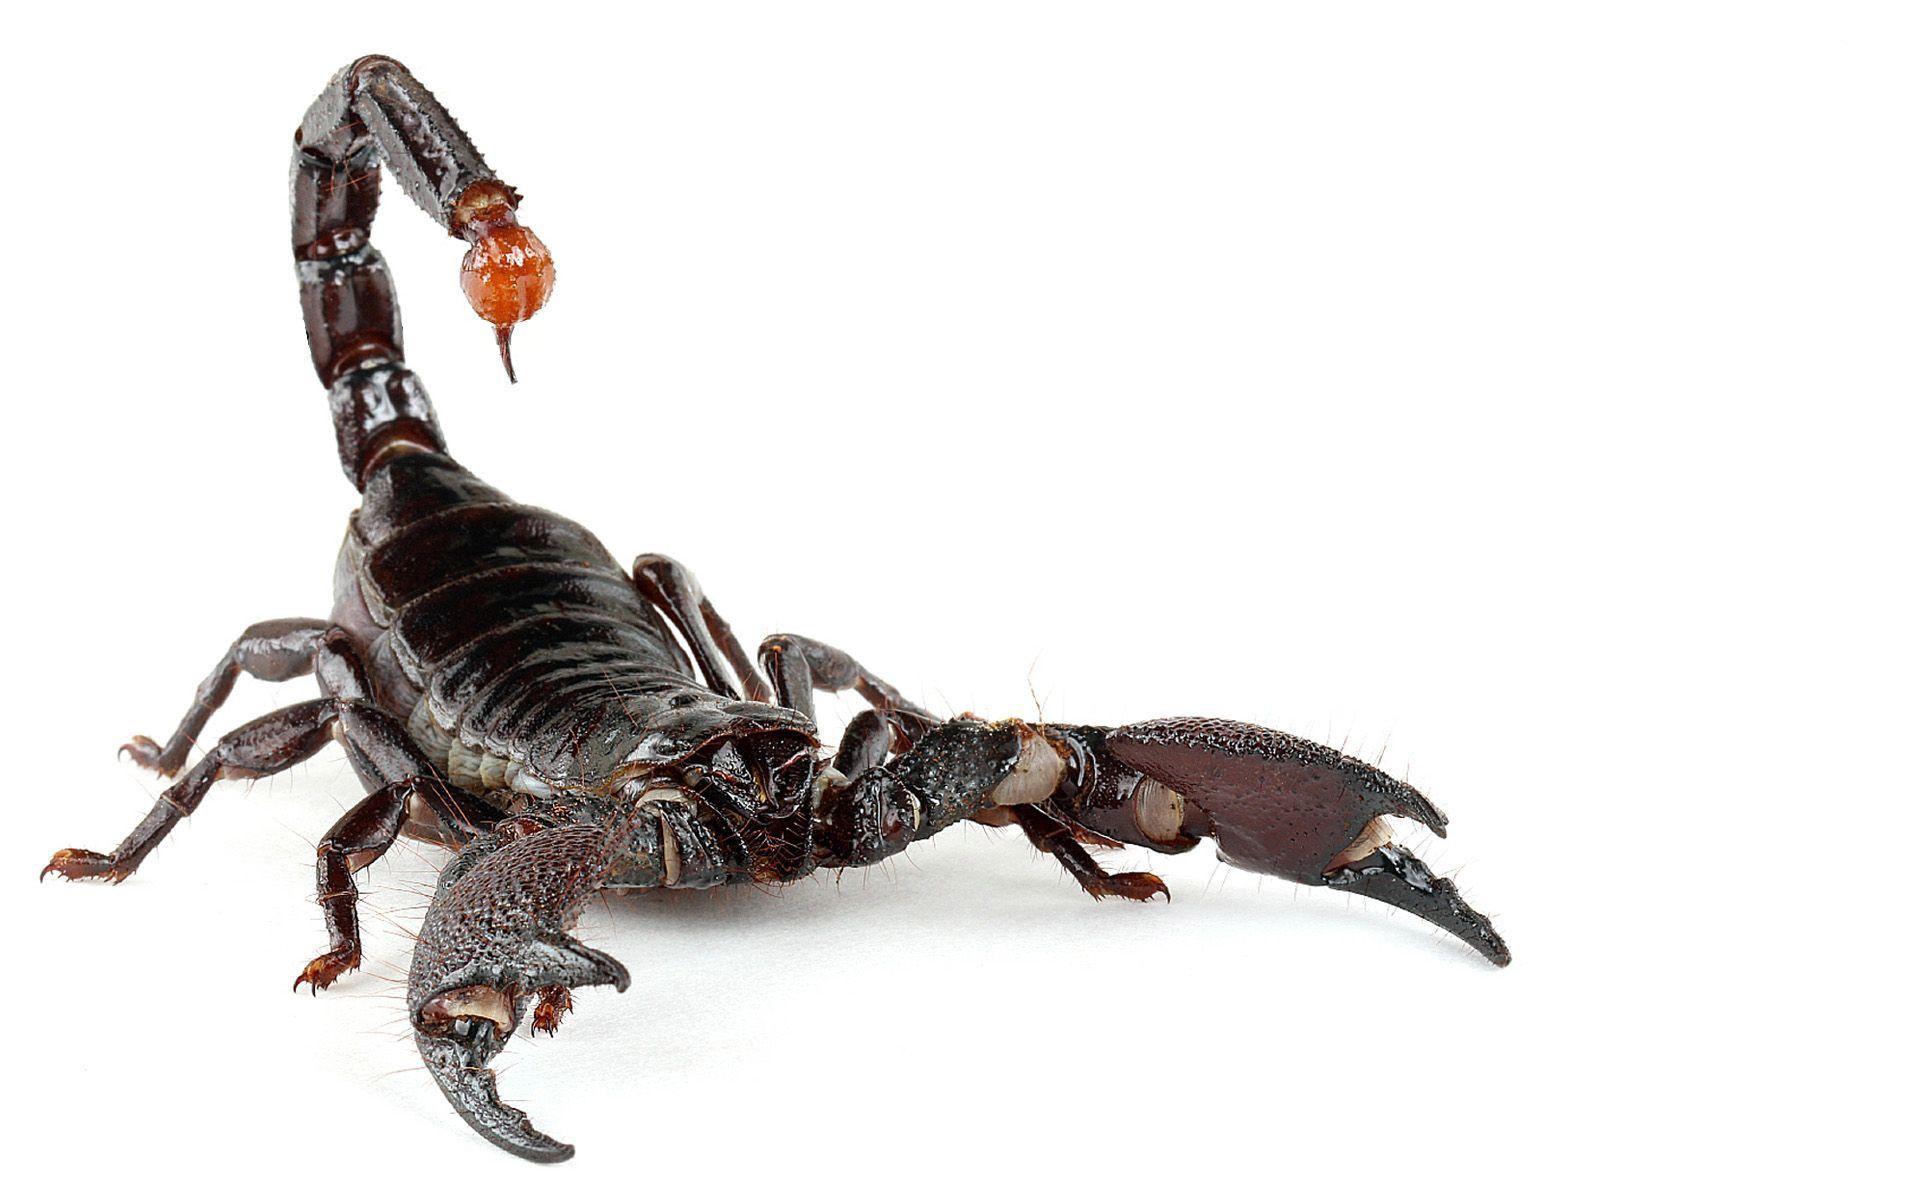 Scorpion HD Image. Scorpion image, Scorpion, Animal wallpaper